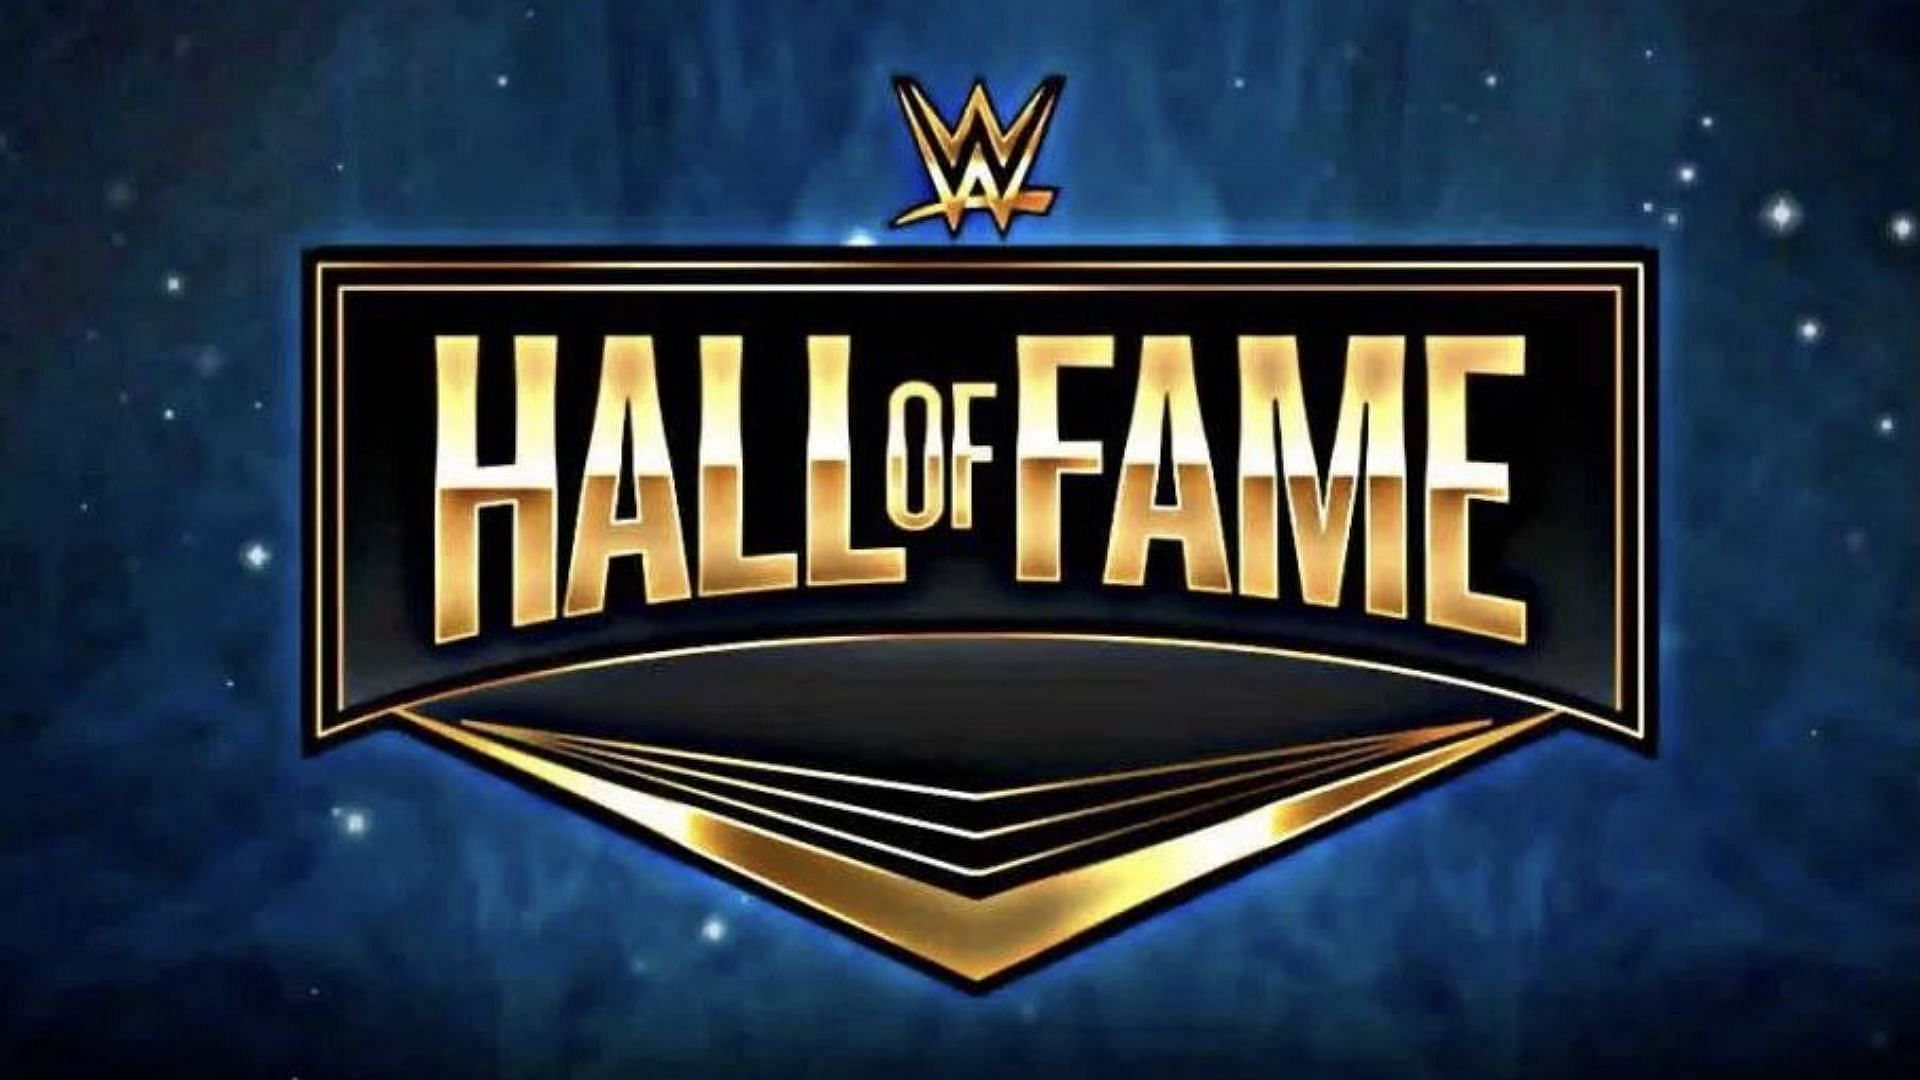 WWE Hall of Fame logo used since 2019.